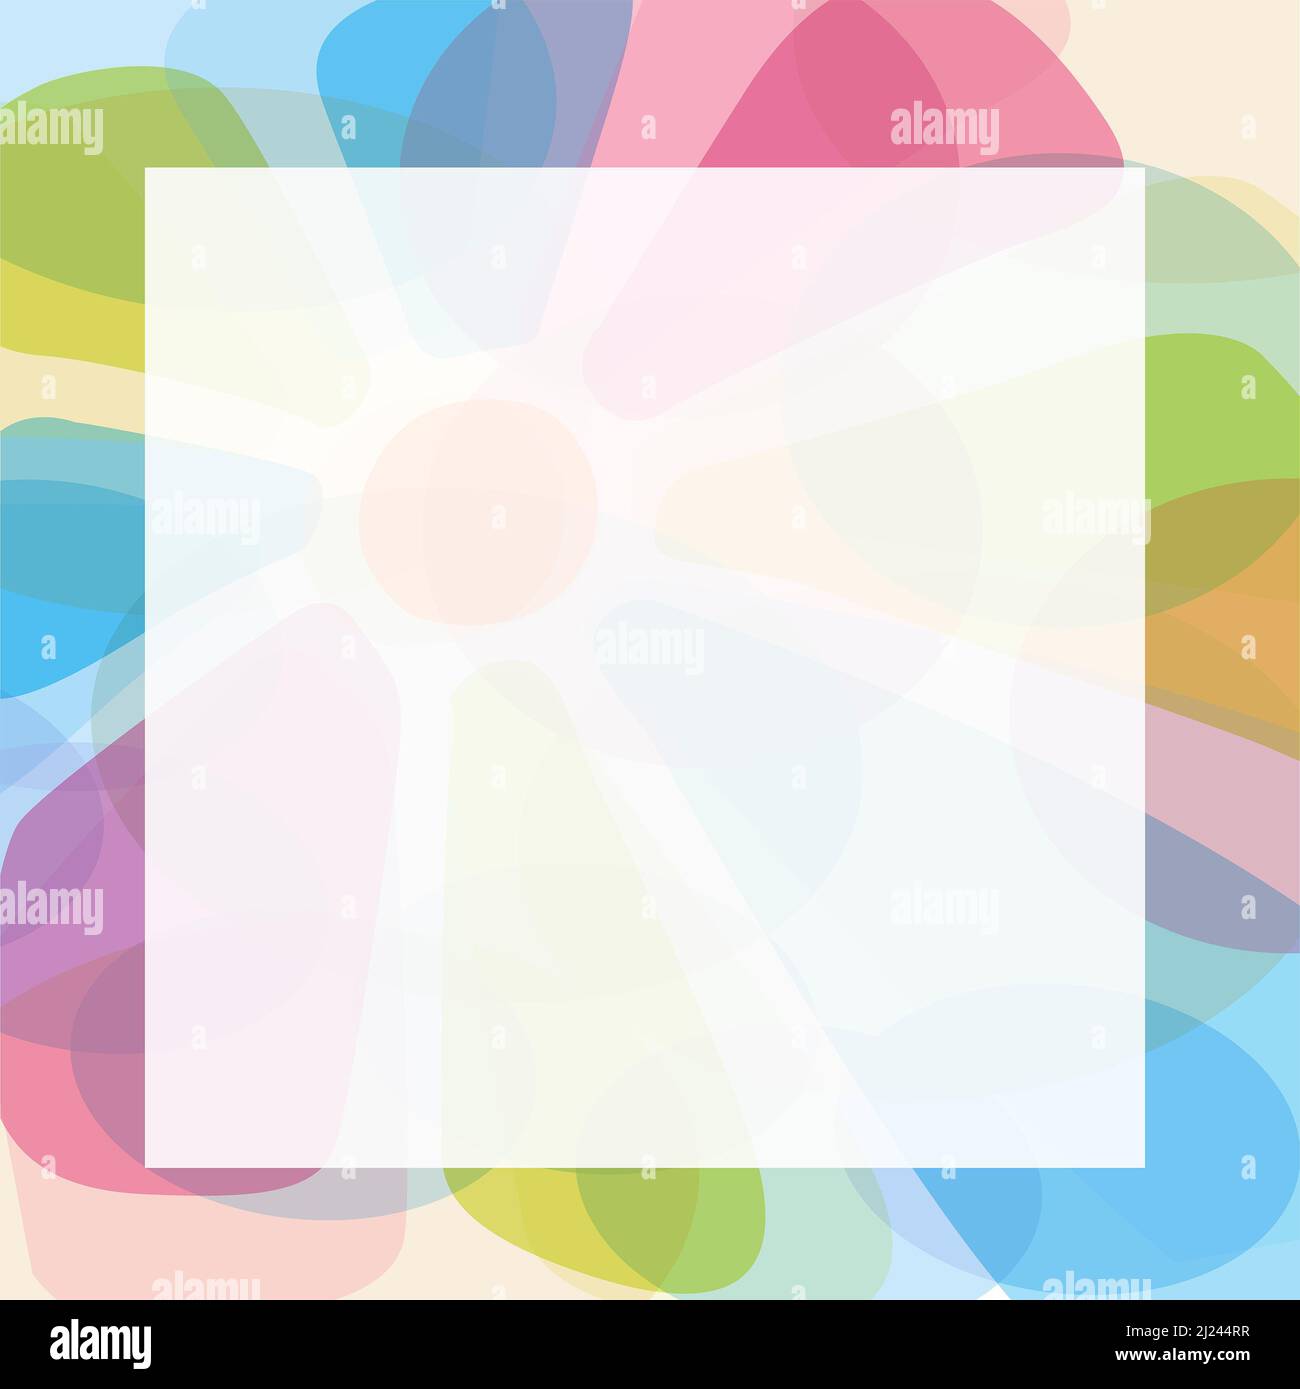 Dekoratives Rahmendesign, farbenfrohe Illustration, horizontales Banner im Retro-Design. Stockfoto